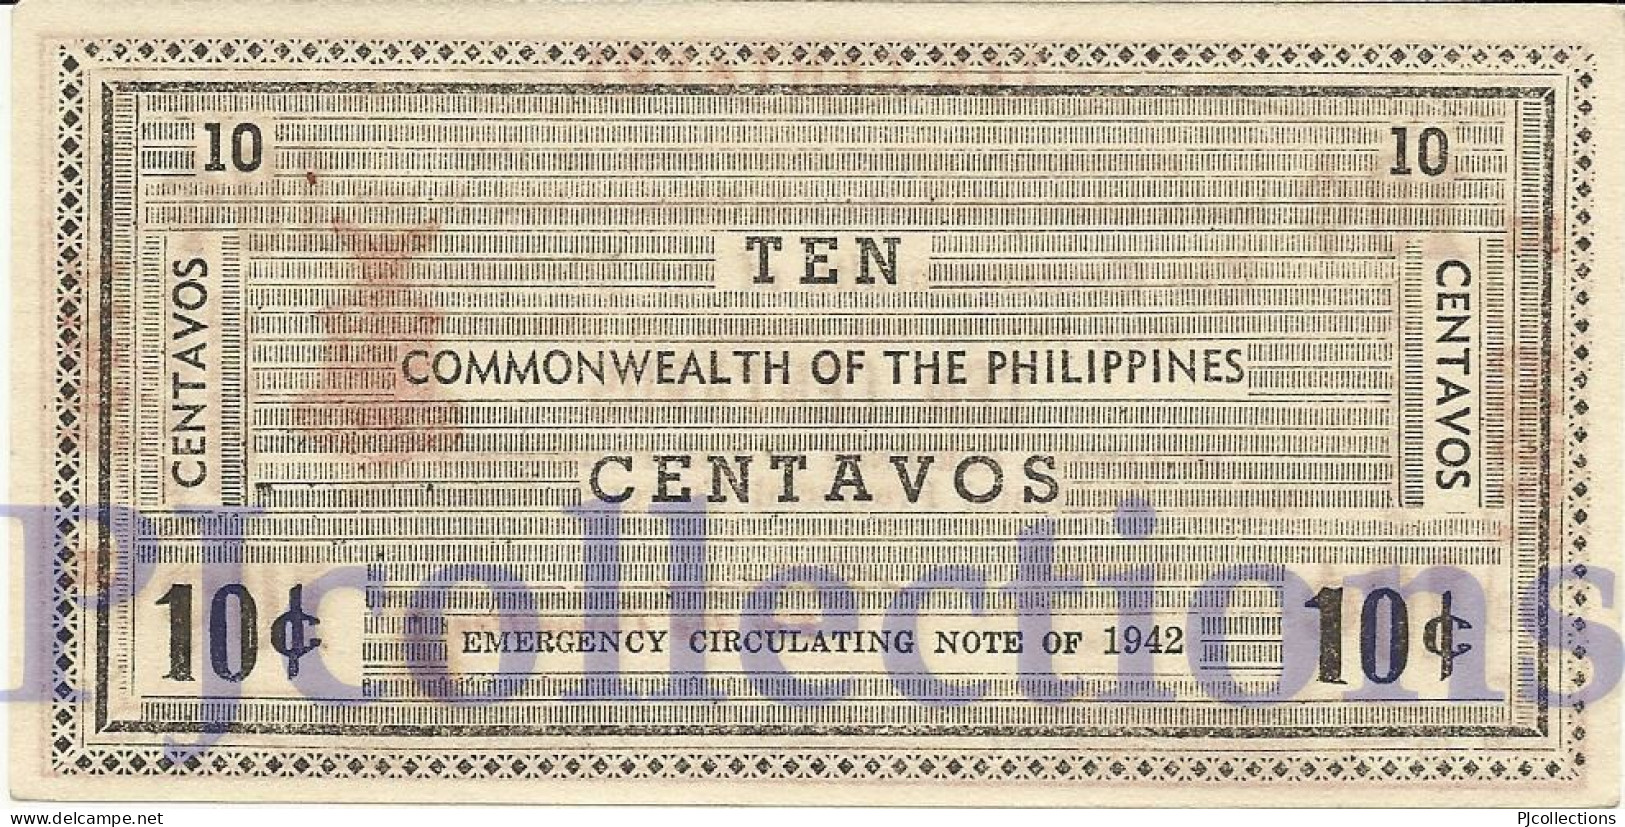 PHILIPPINES 10 CENTAVOS 1942 PICK S643a AUNC EMERGENCY NOTE - Philippinen